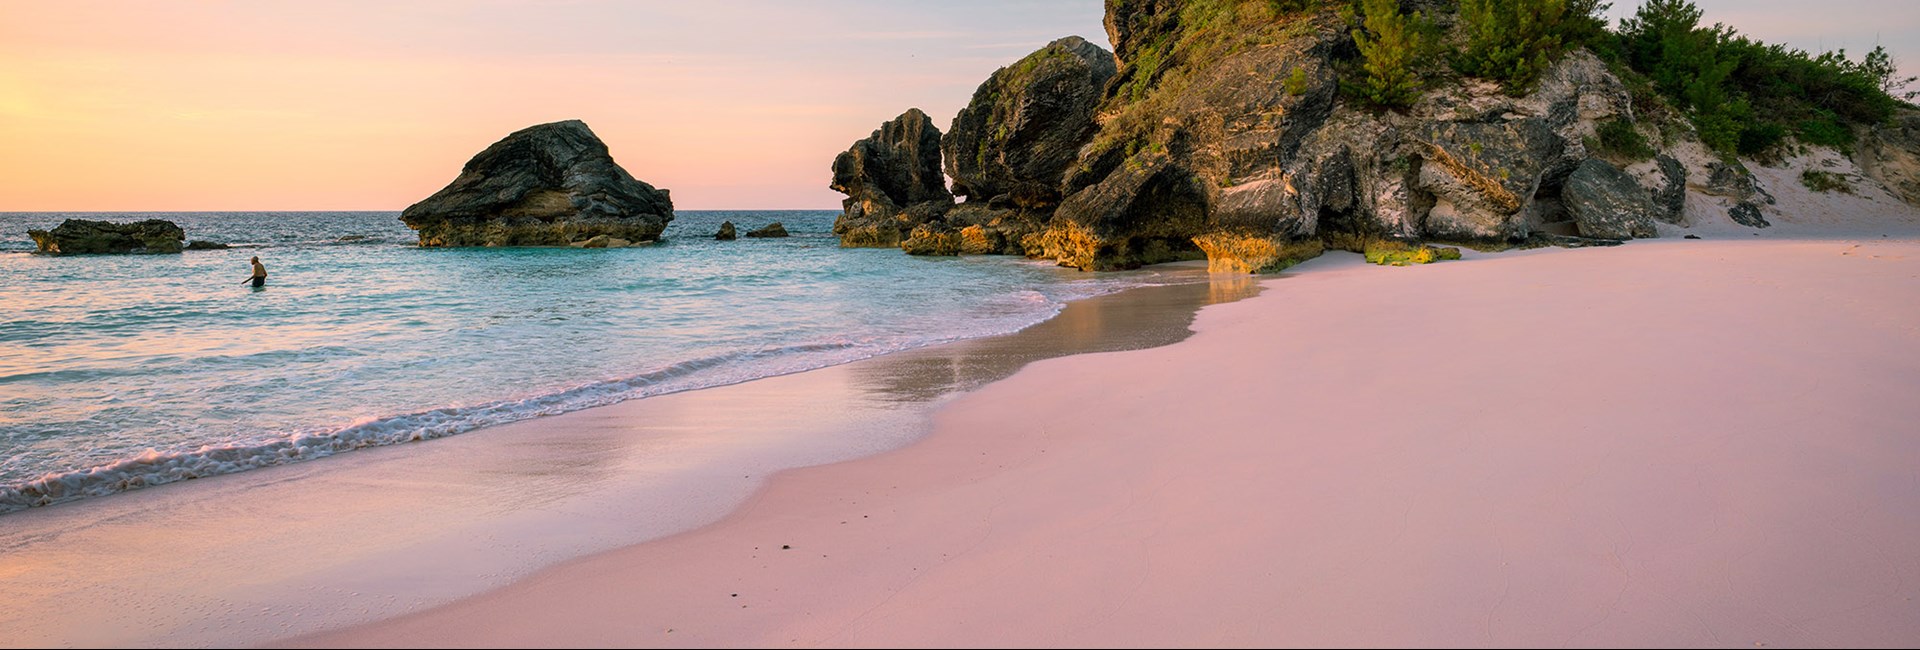 Incredible Beach  Pink sand beach bermuda, Pink sand beach, Beautiful  beaches